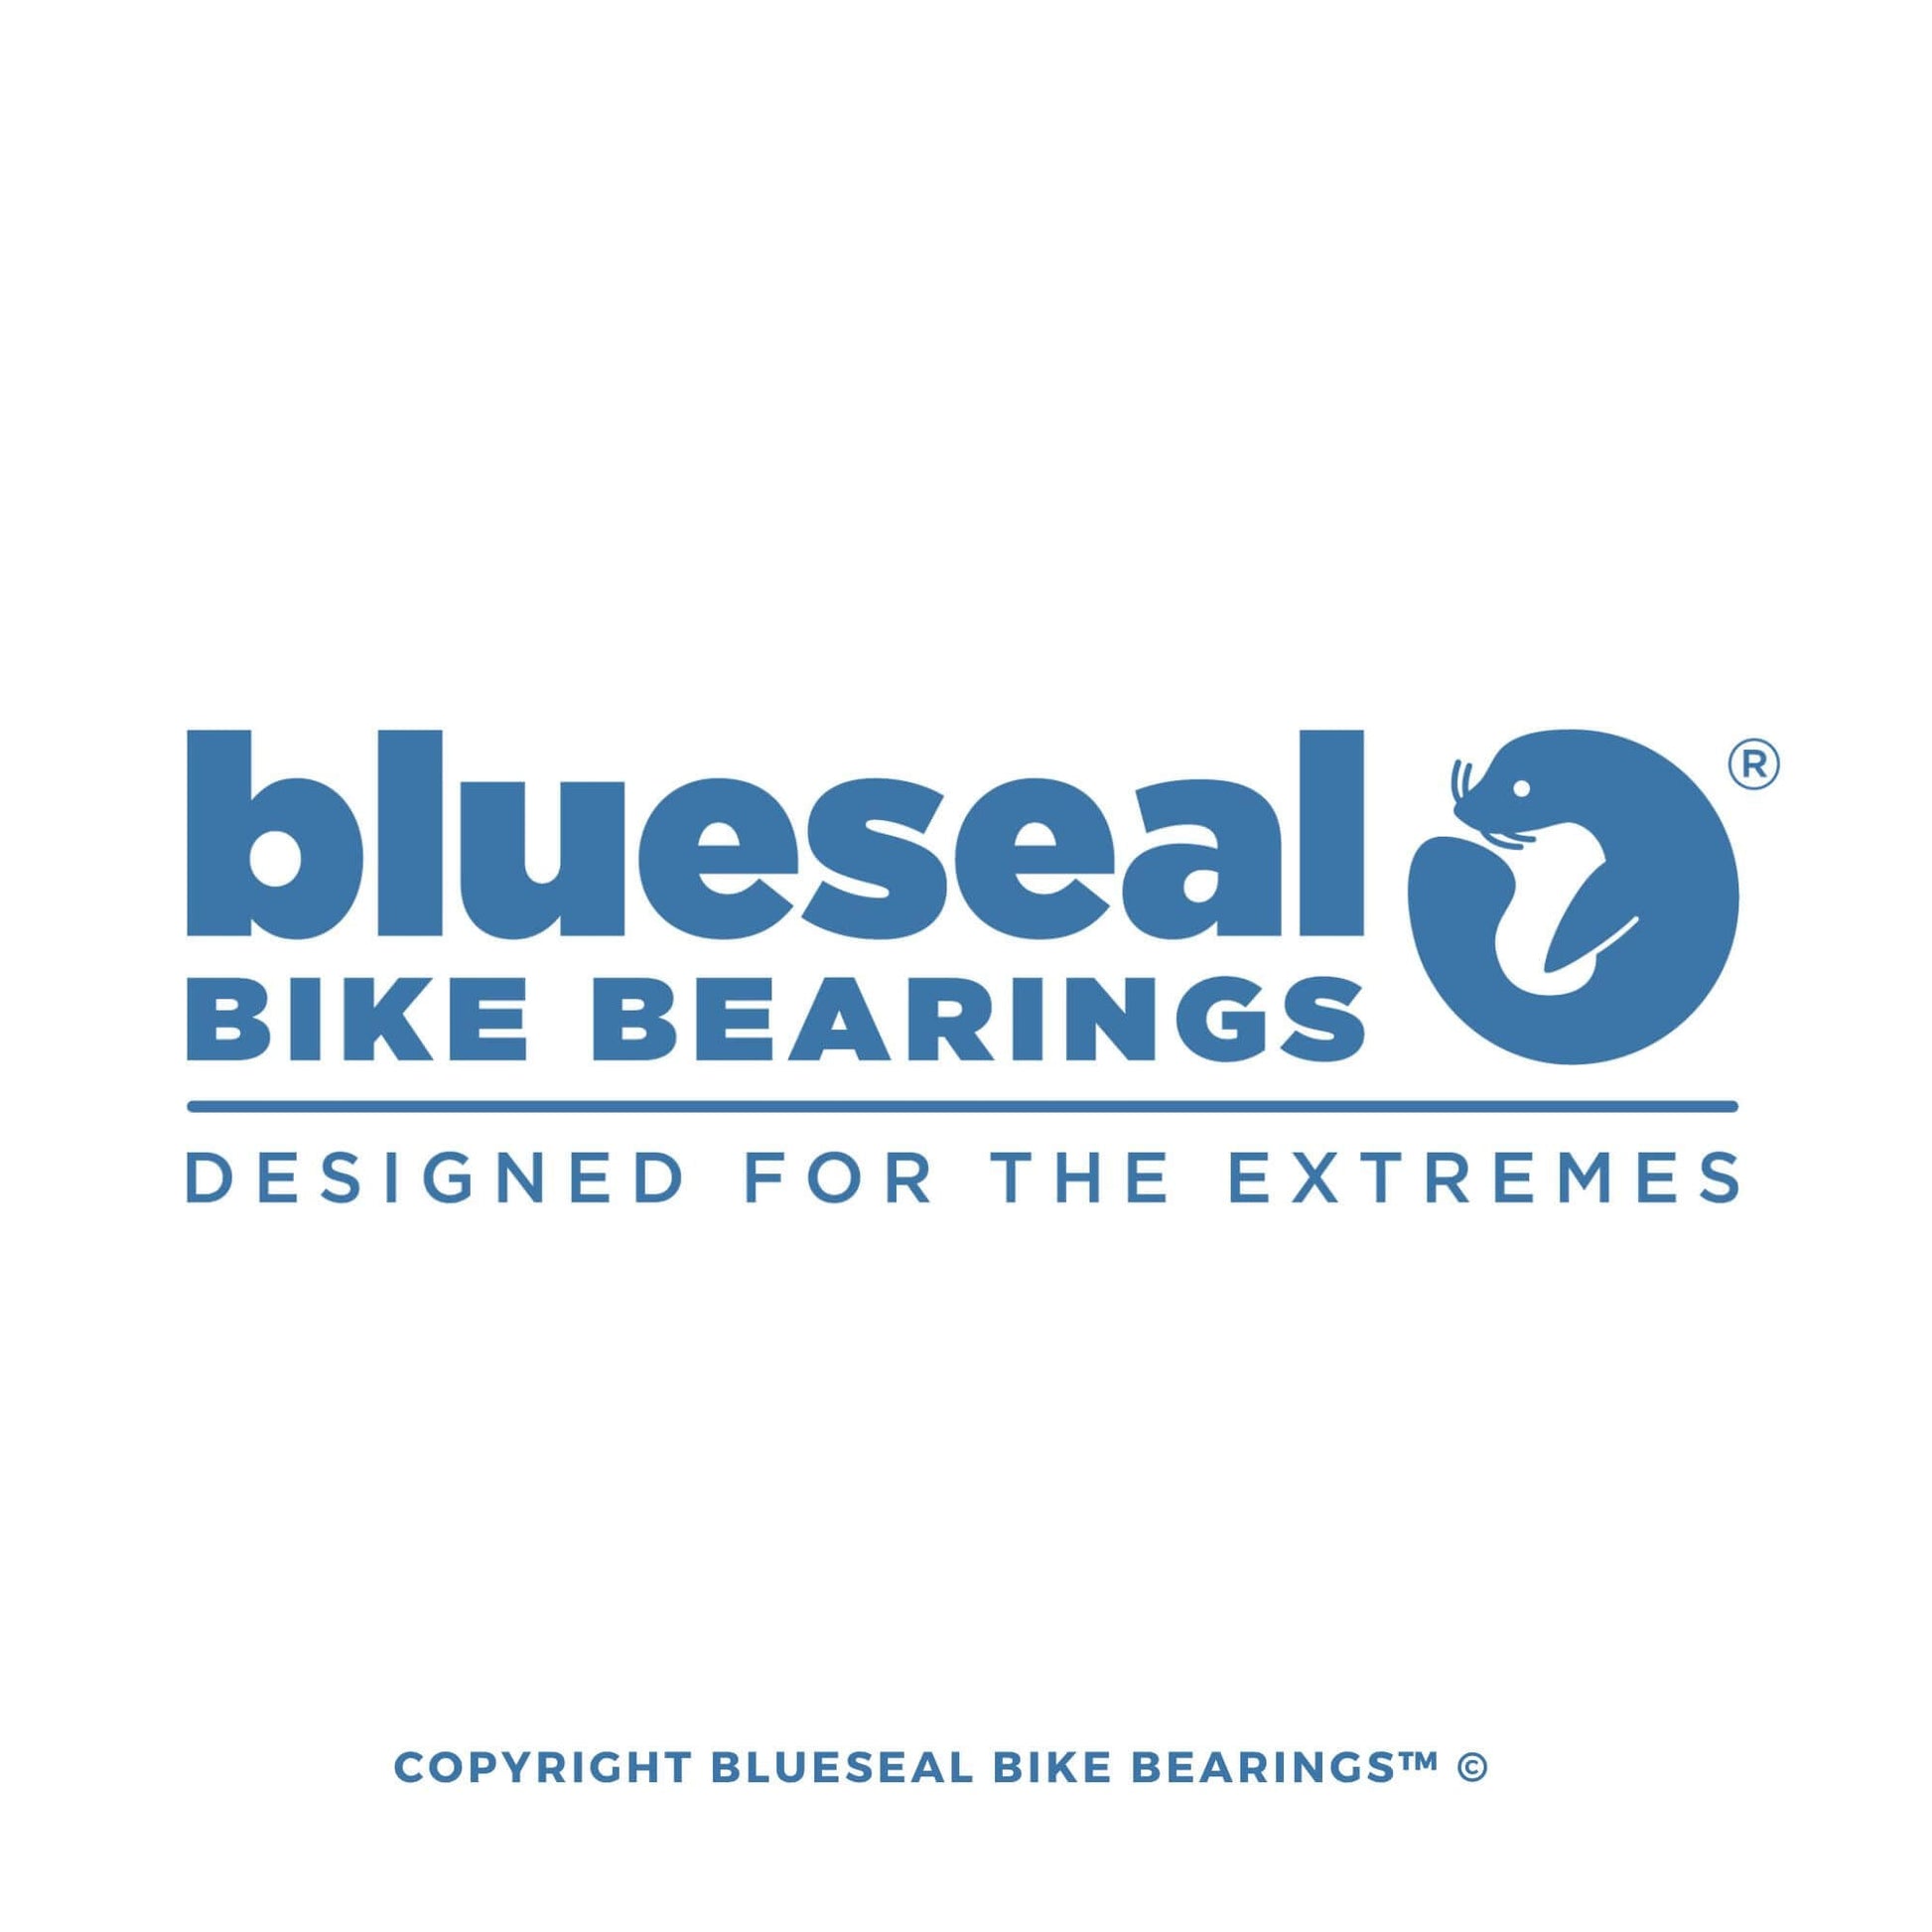 6802 LLB | 15 x 24 x 5mm | Blueseal Bike Bearings™ - Trailvision - Bicycle Bearing Suppliers